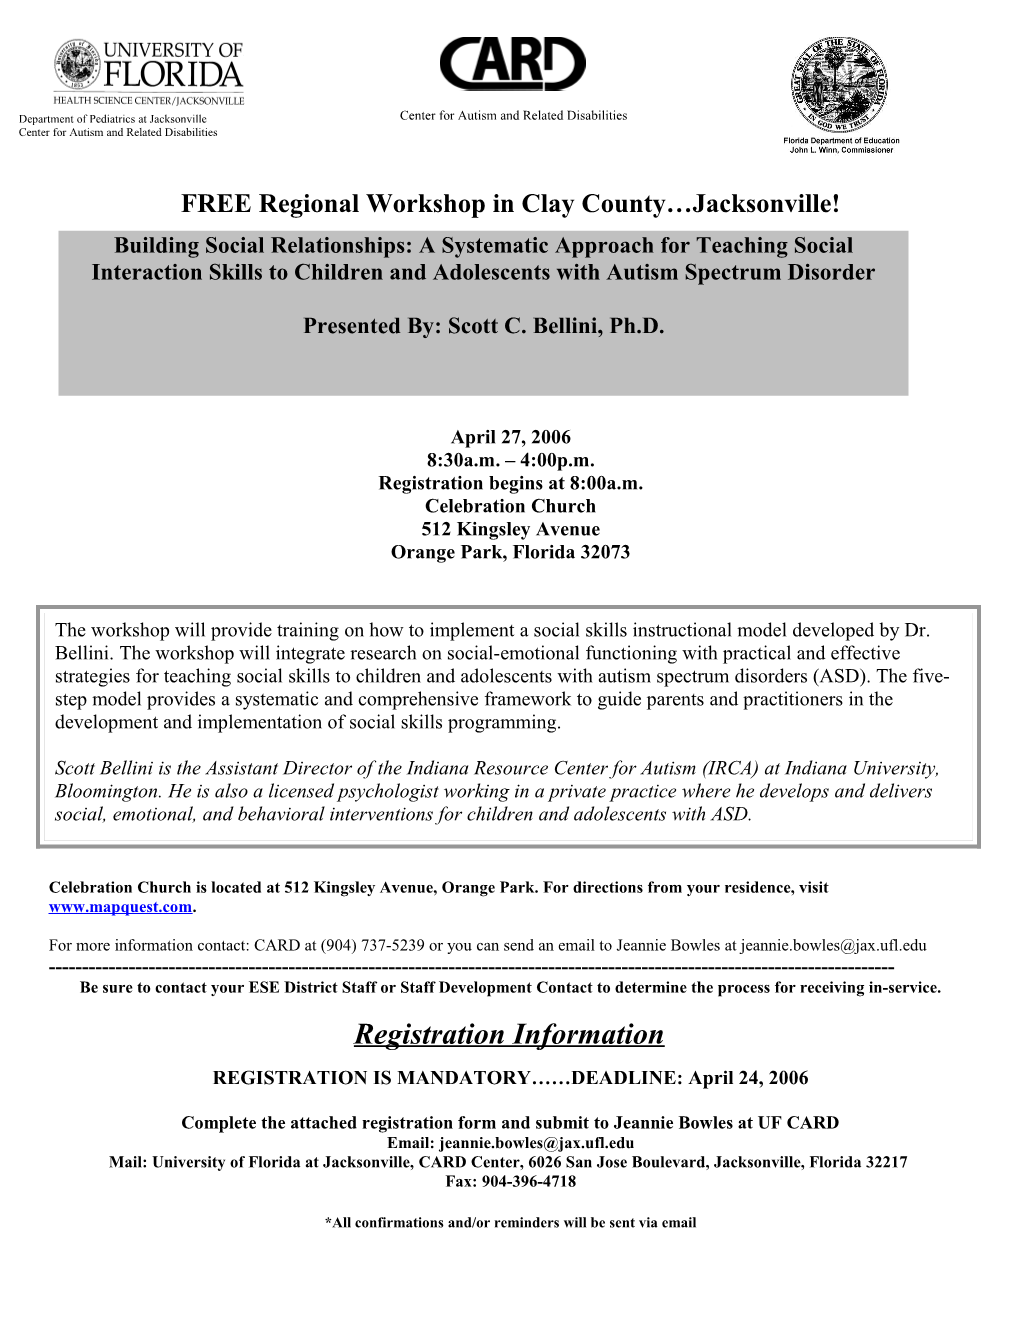 FREE Regional Workshop in Claycounty Jacksonville!